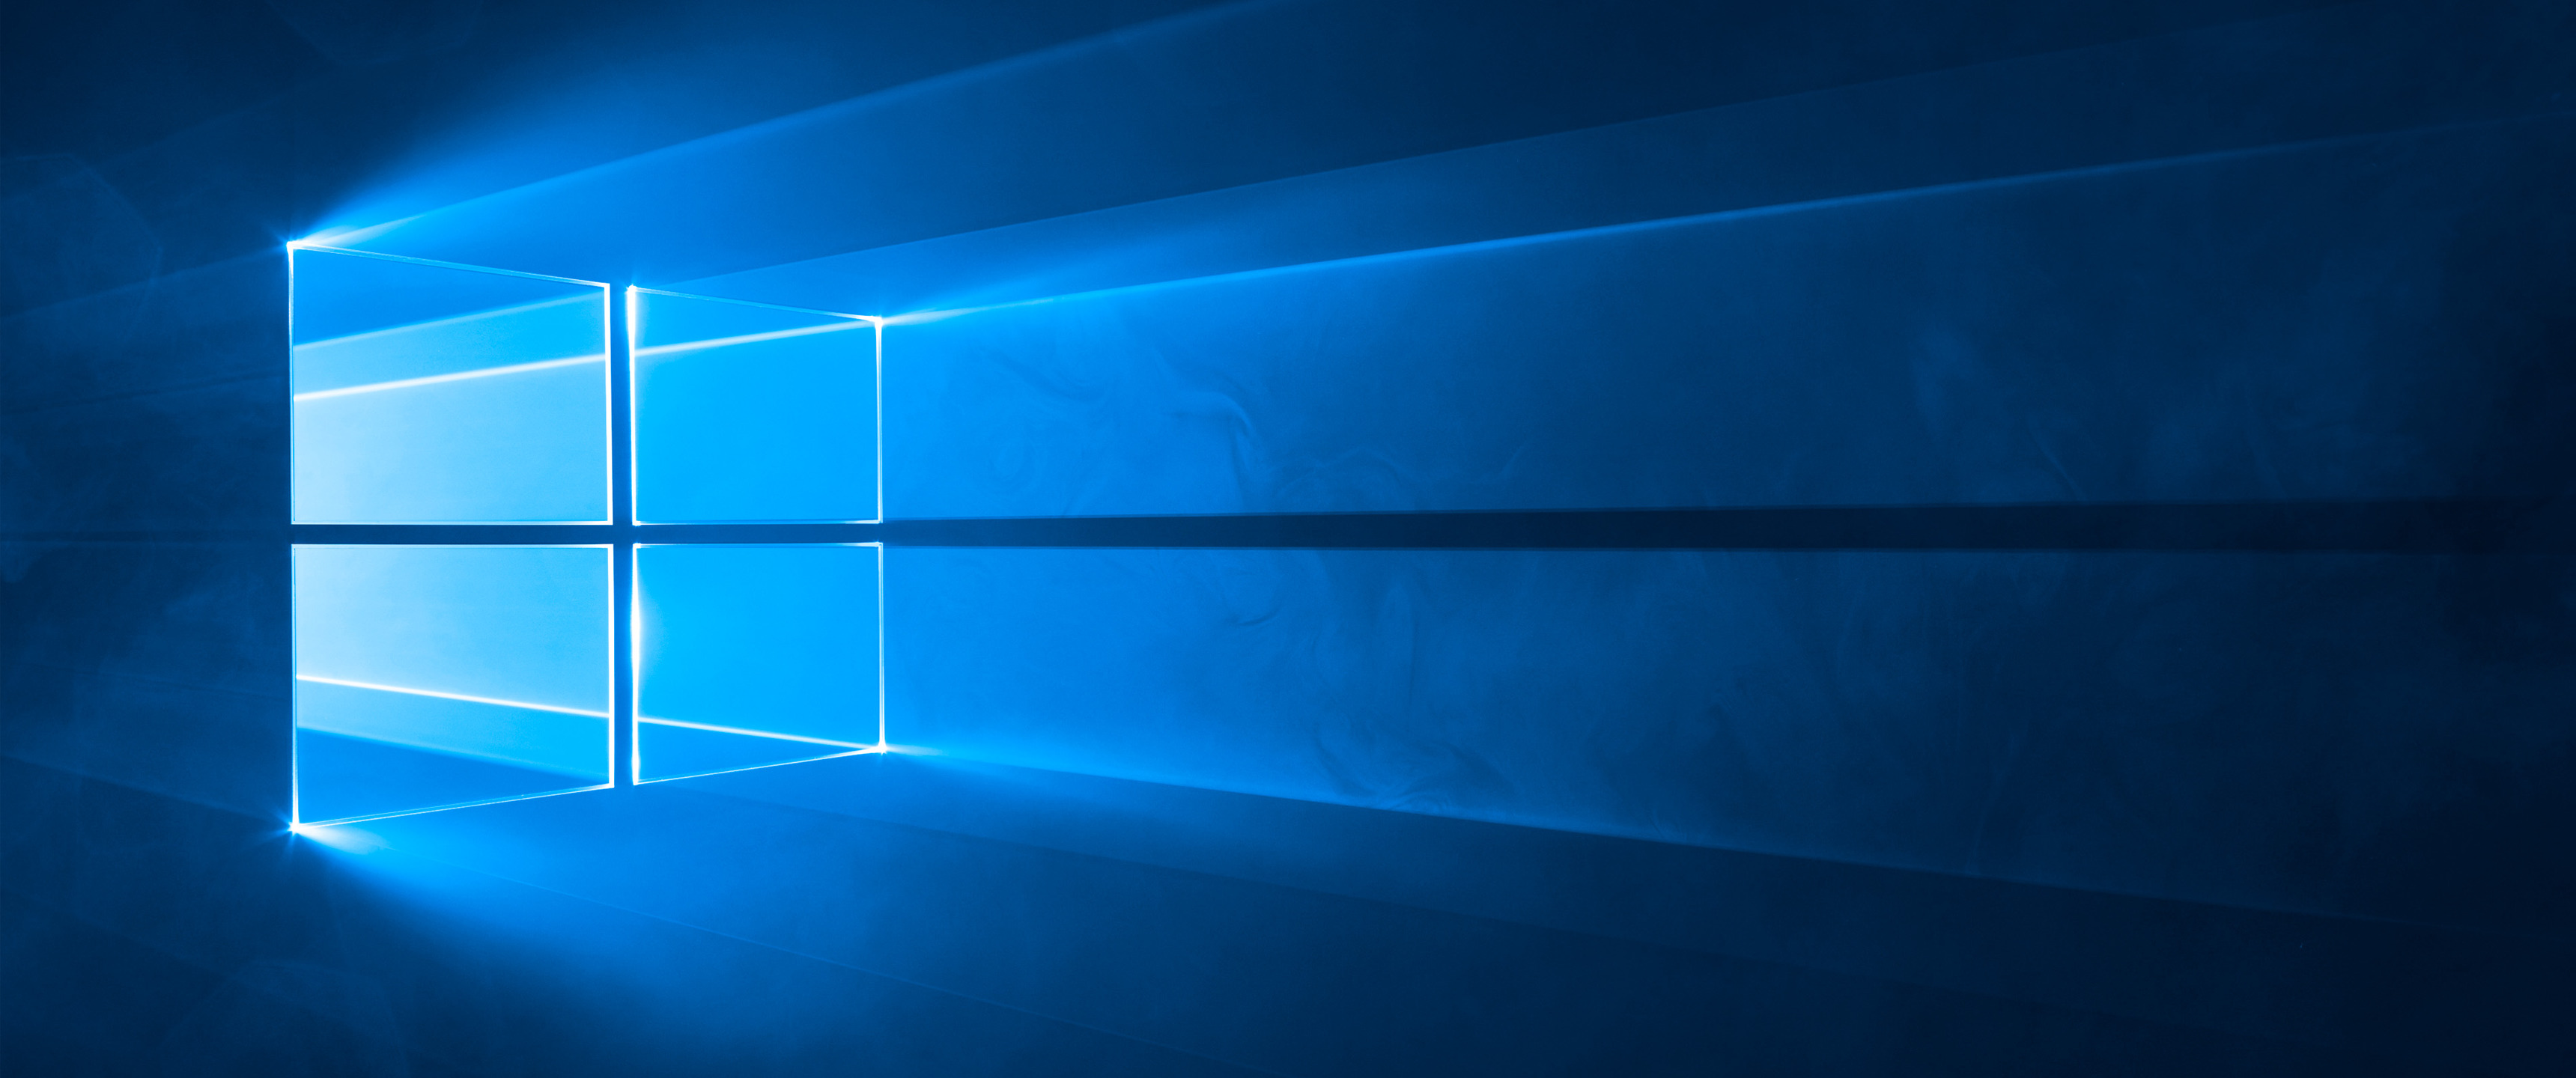 windows10, Microsoft, Abstract, Microsoft Windows Wallpaper